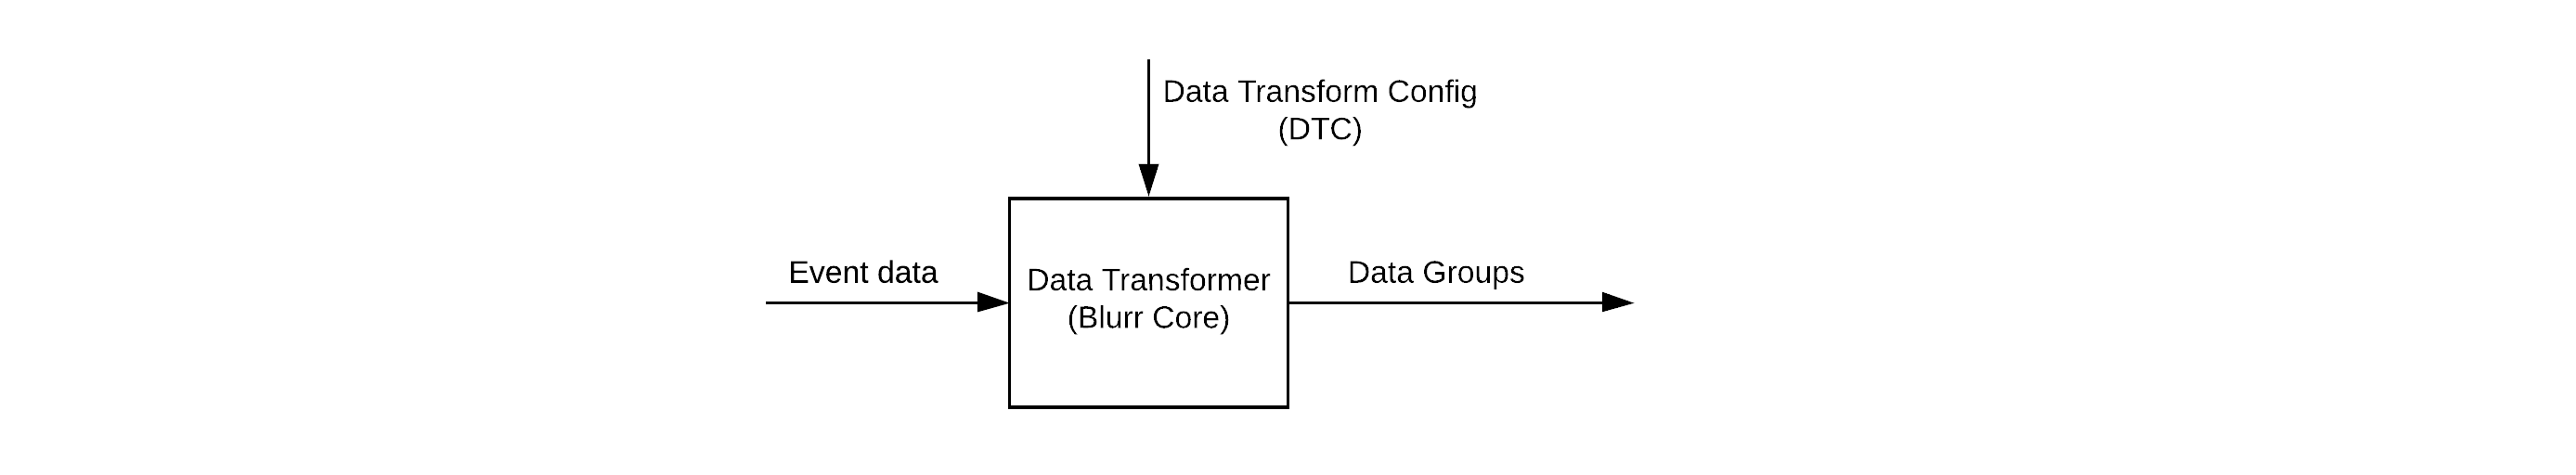 Data Transformer